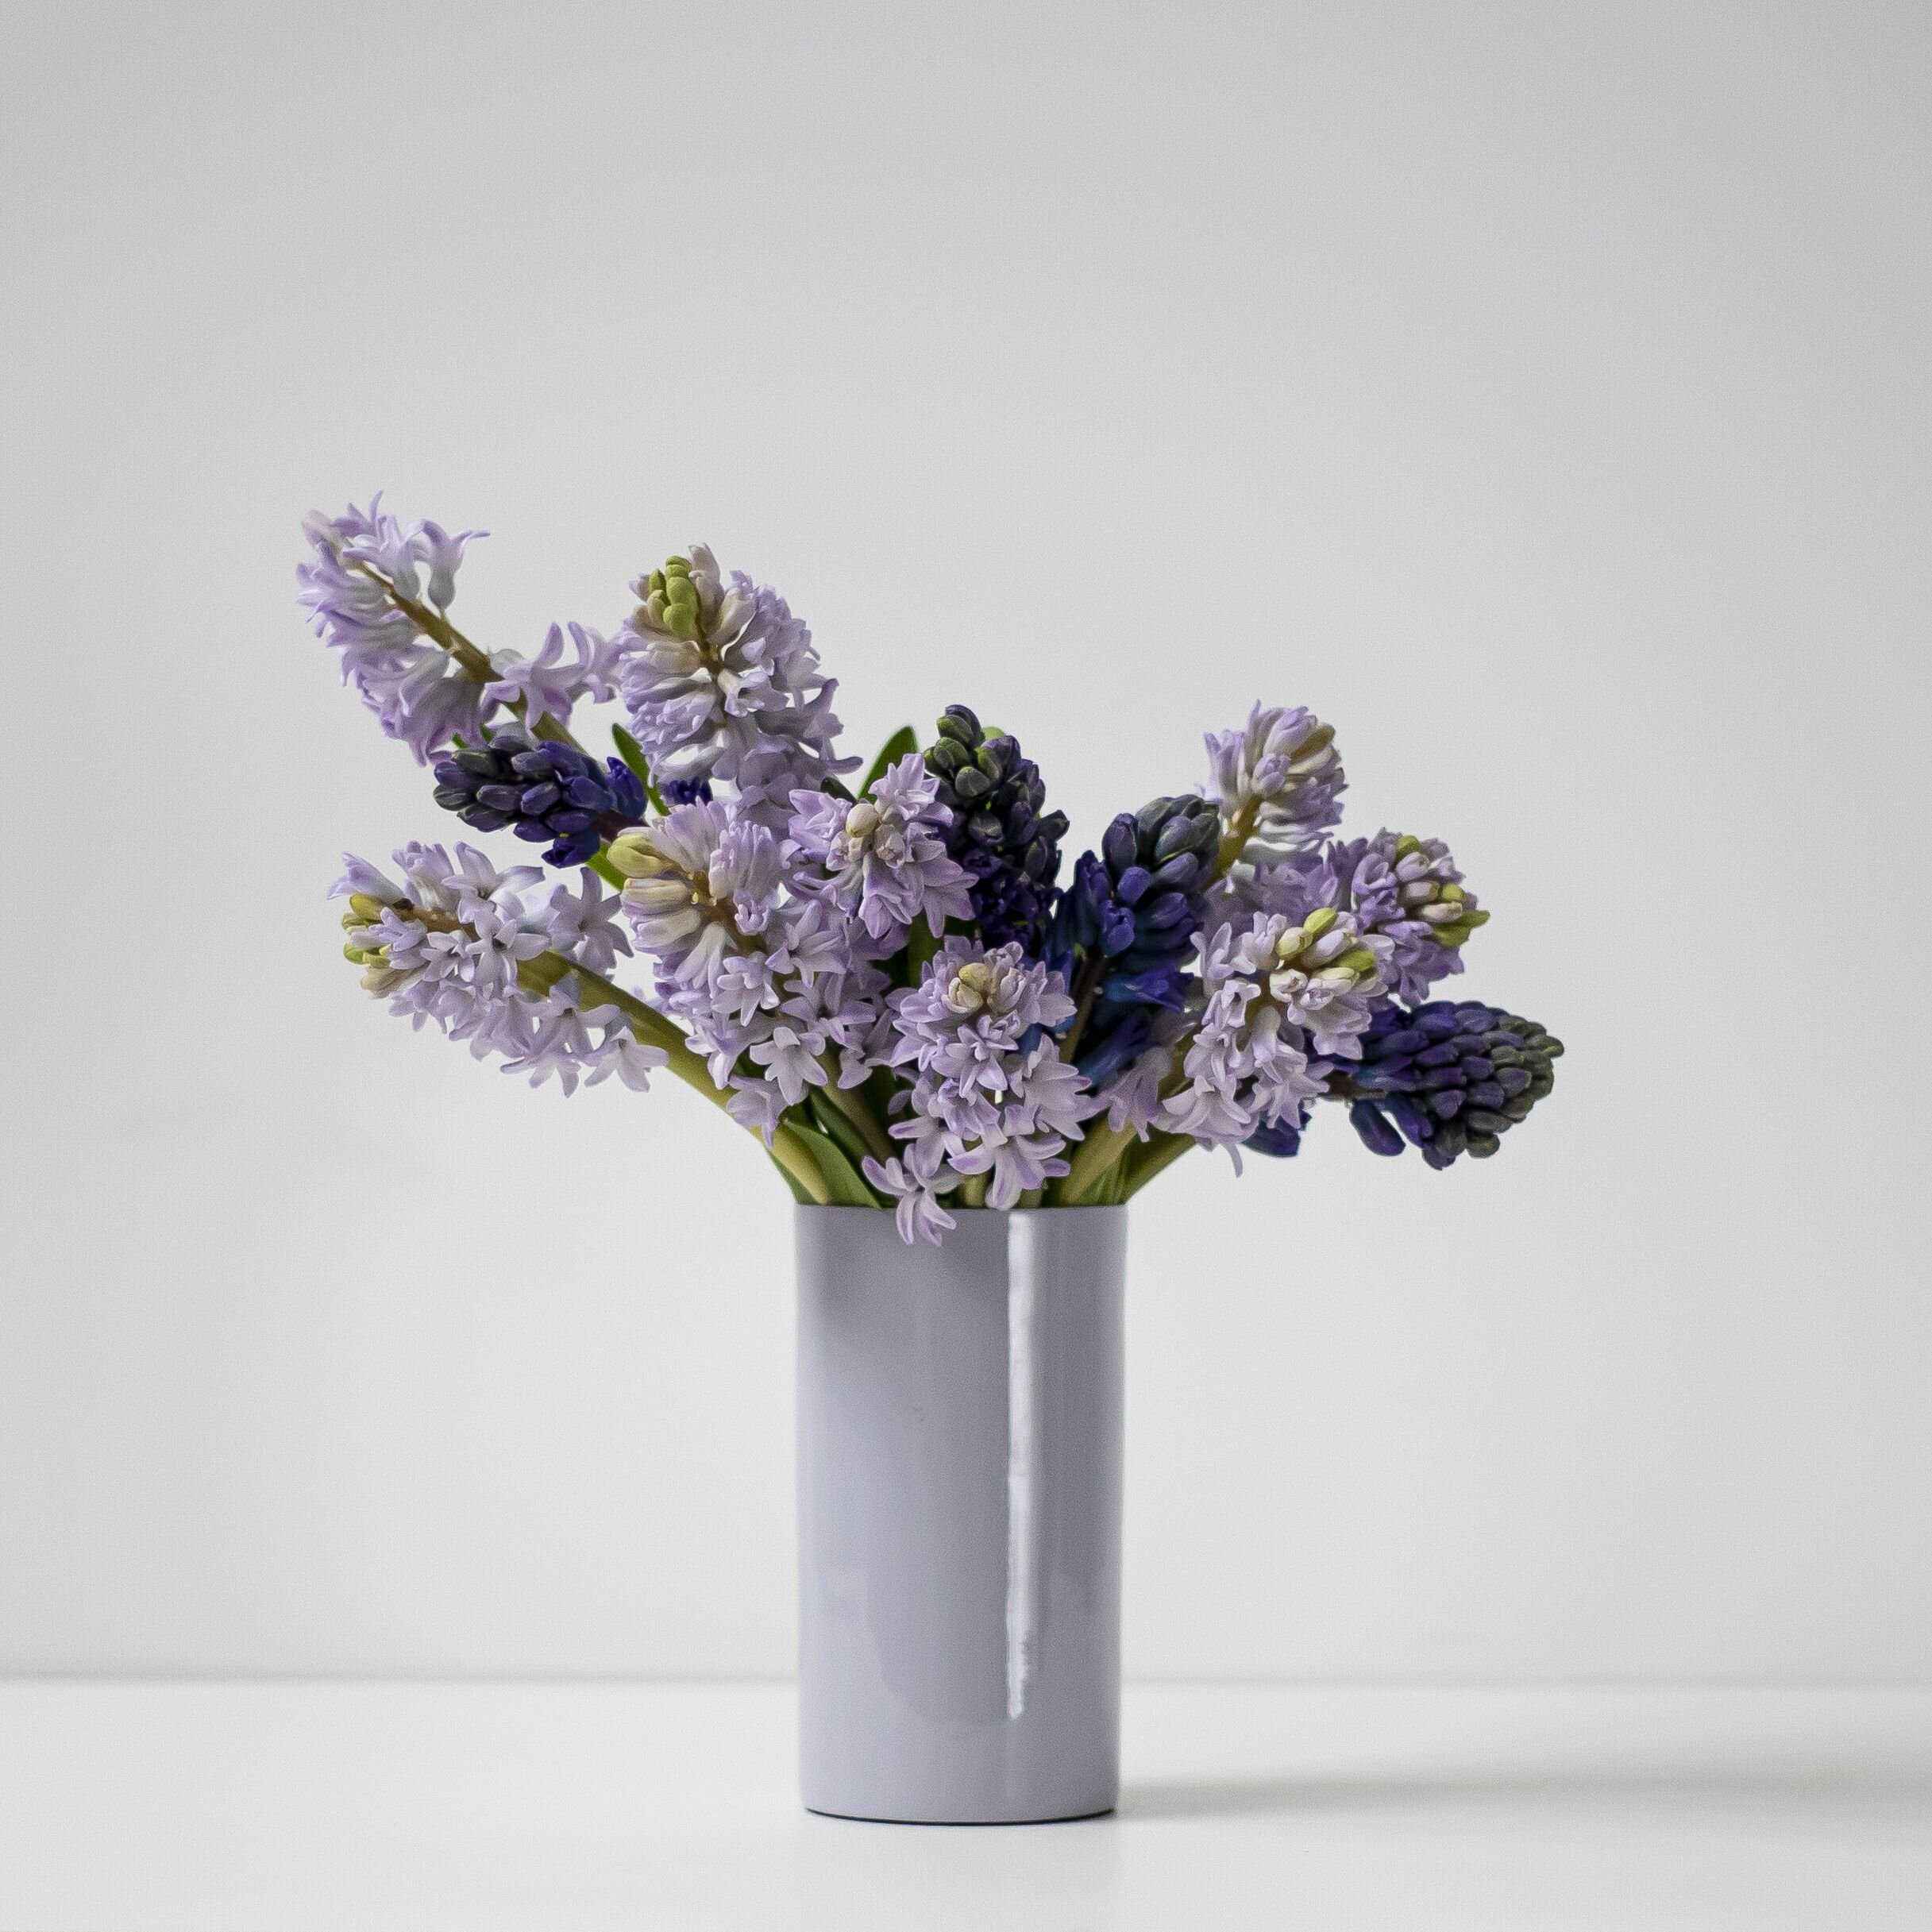 Stems of light purple and dark purple Hyacinth stems sitting in a lavender purple vase